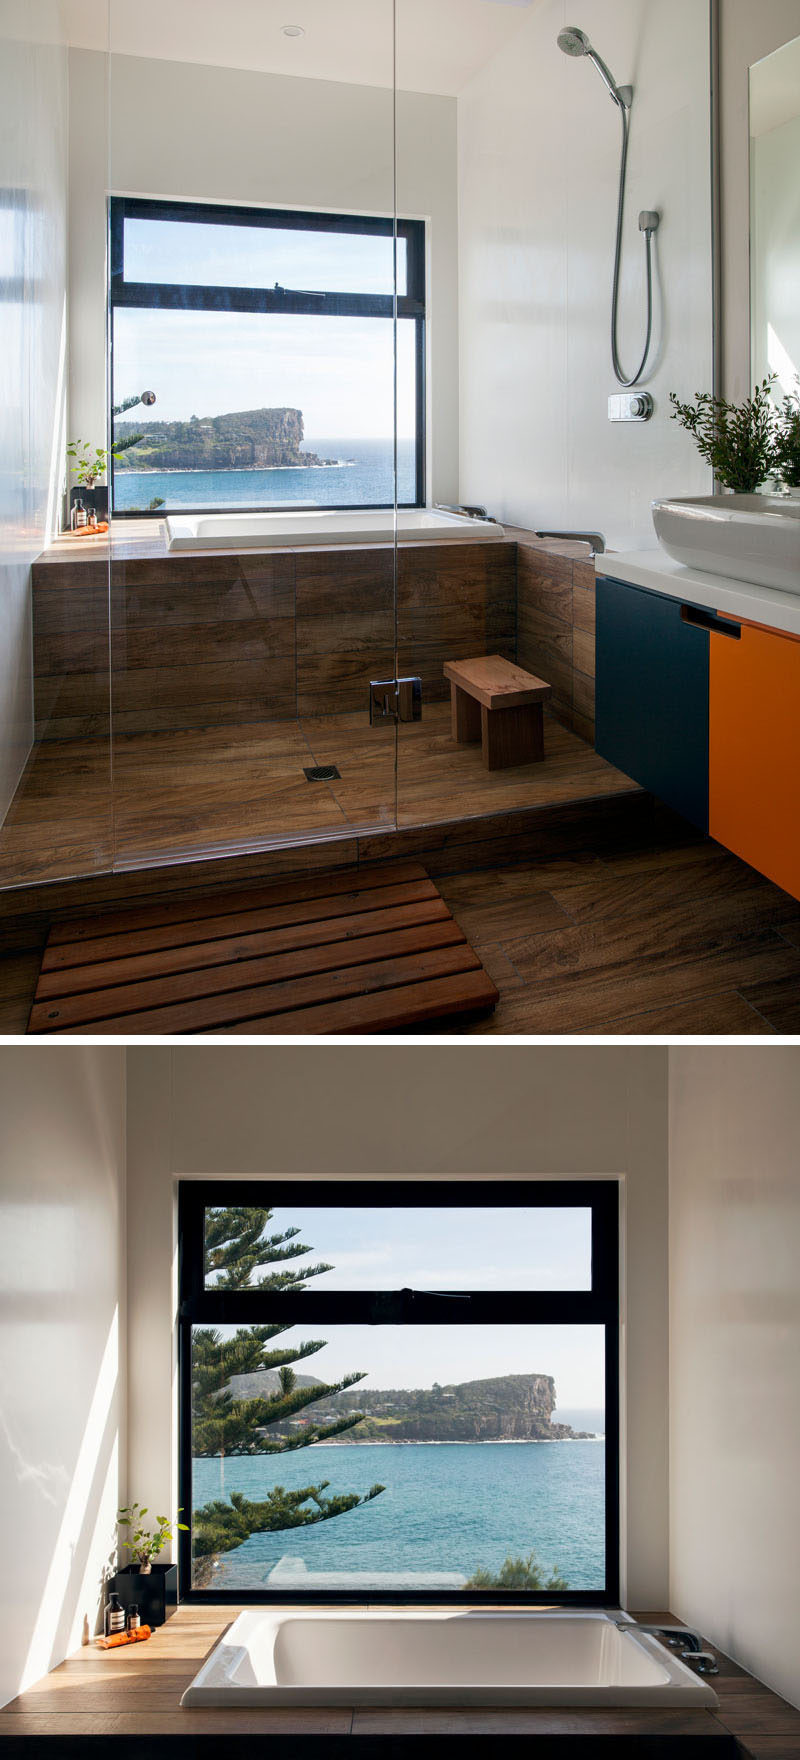 Bathroom Design Idea - Create a Spa-Like Bathroom At Home // Include a luxurious deep soaker tub.